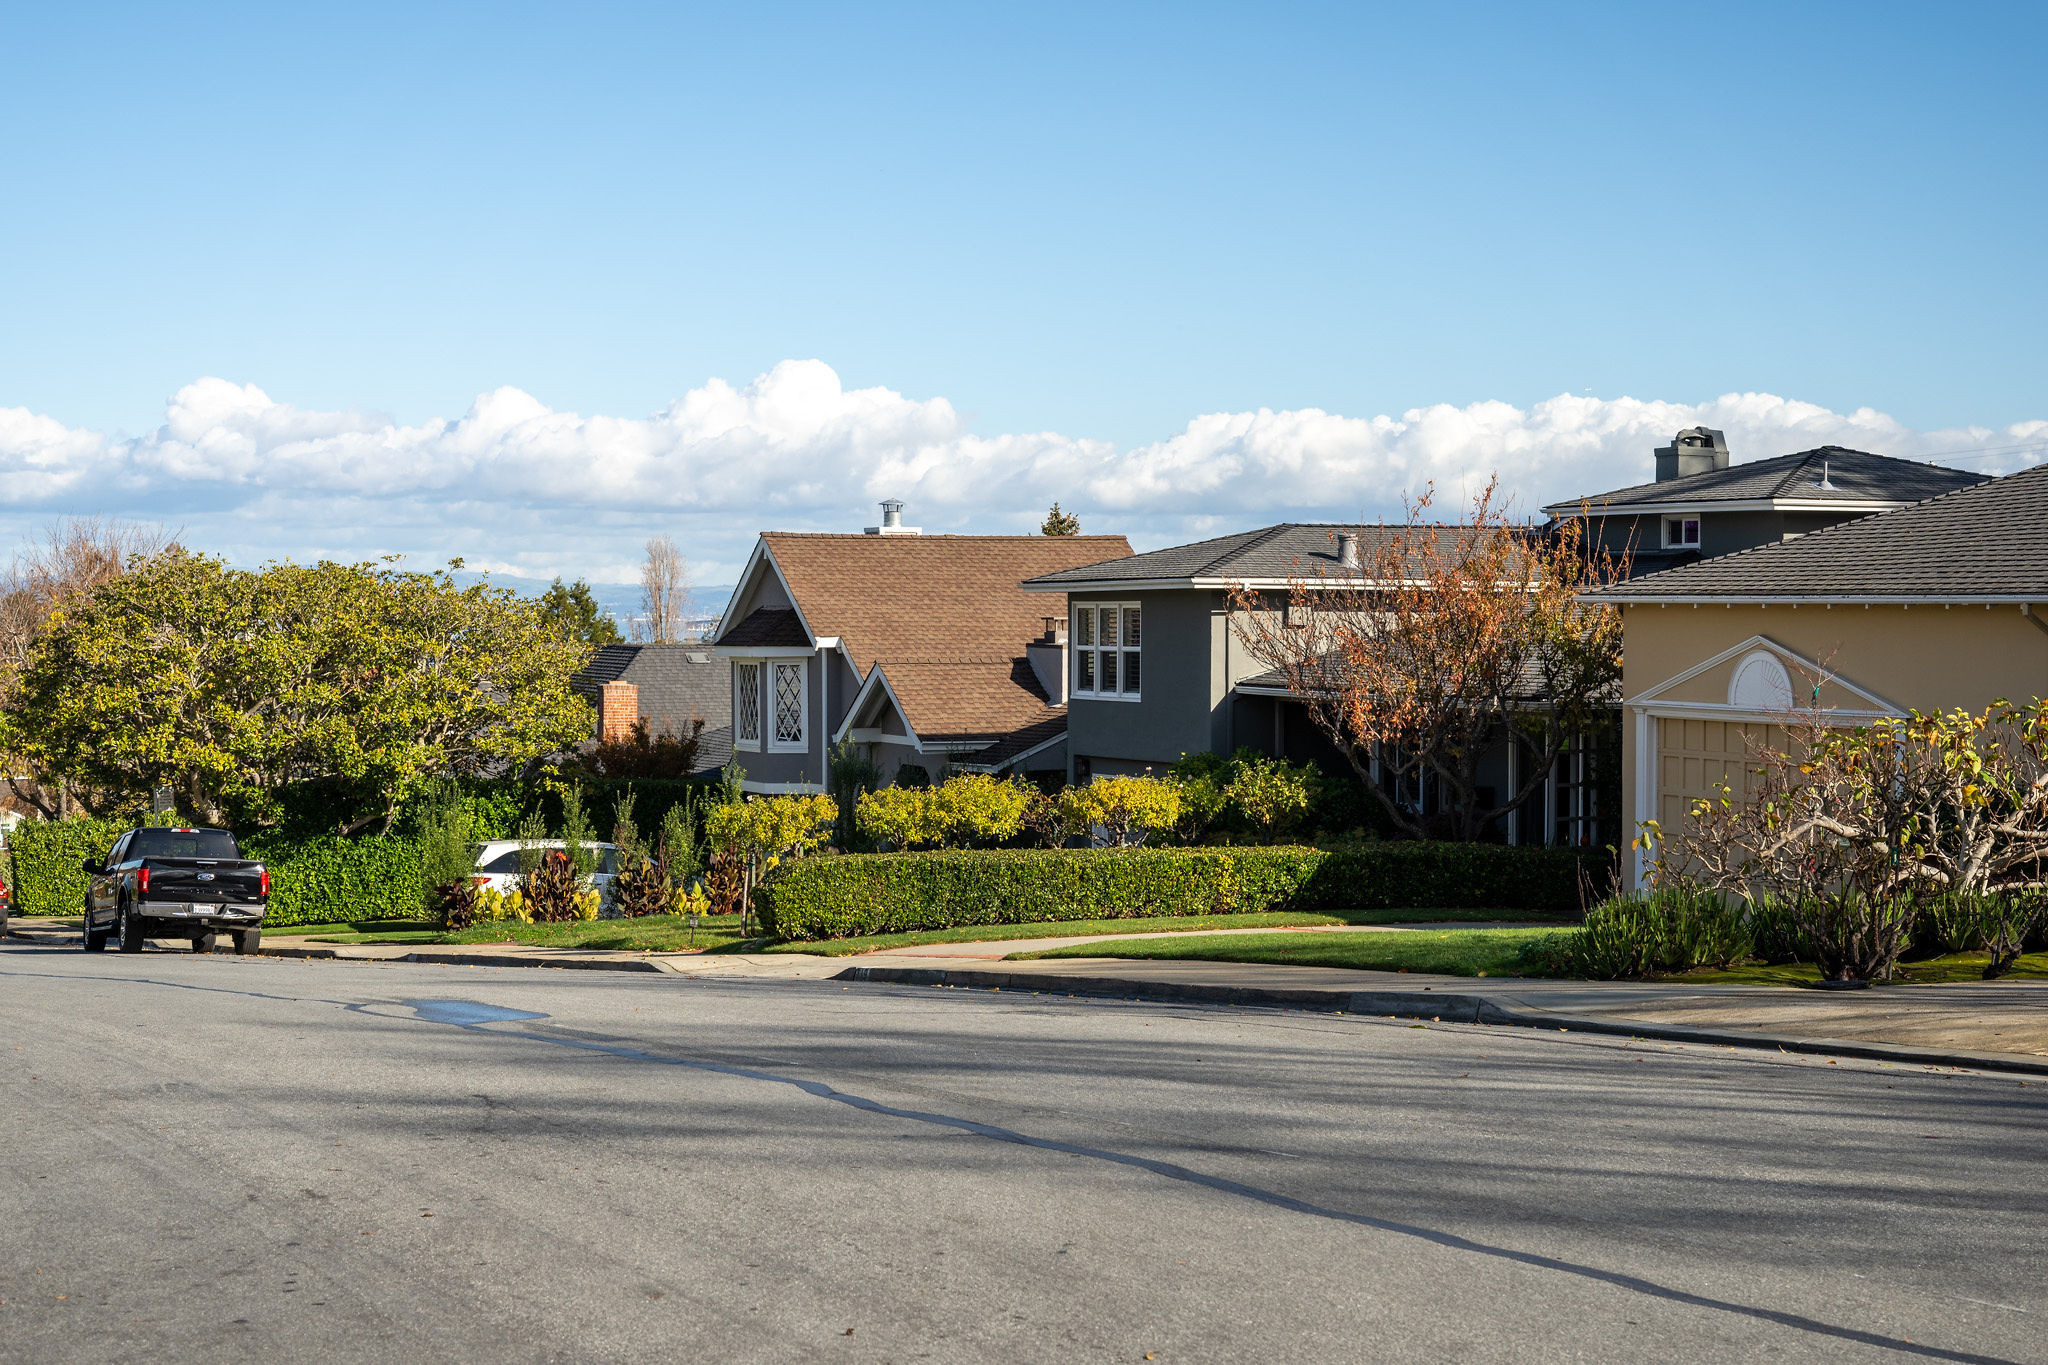 Baywood Knolls neighborhood view and clouds on the horizon in San Mateo.